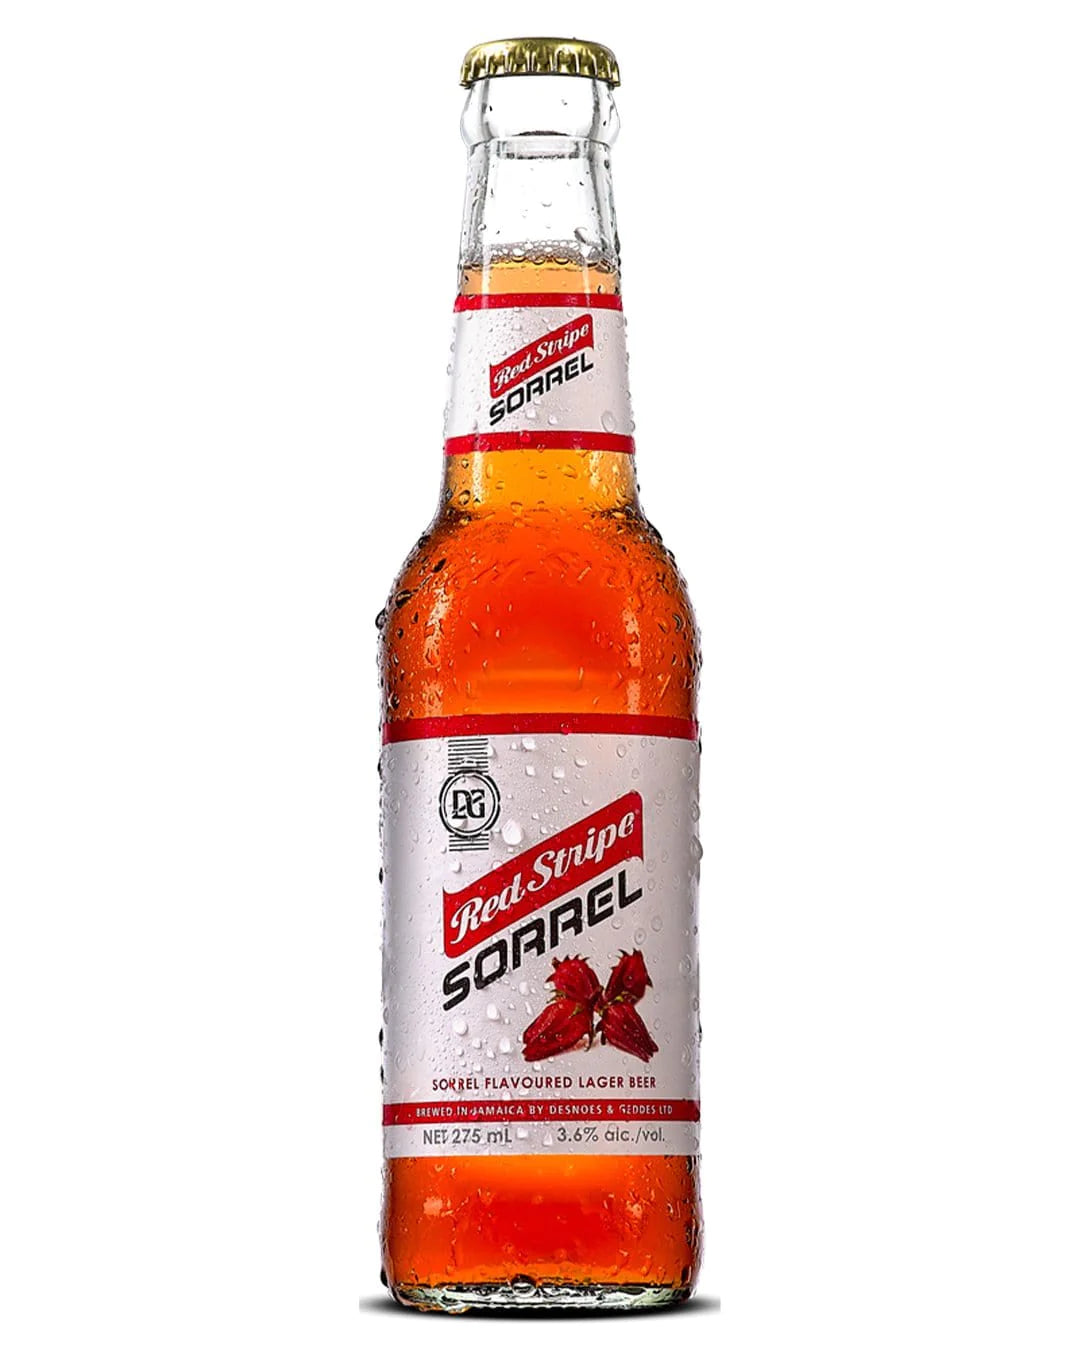 Red Stripe Sorrel Bottle 275ml Case of 12